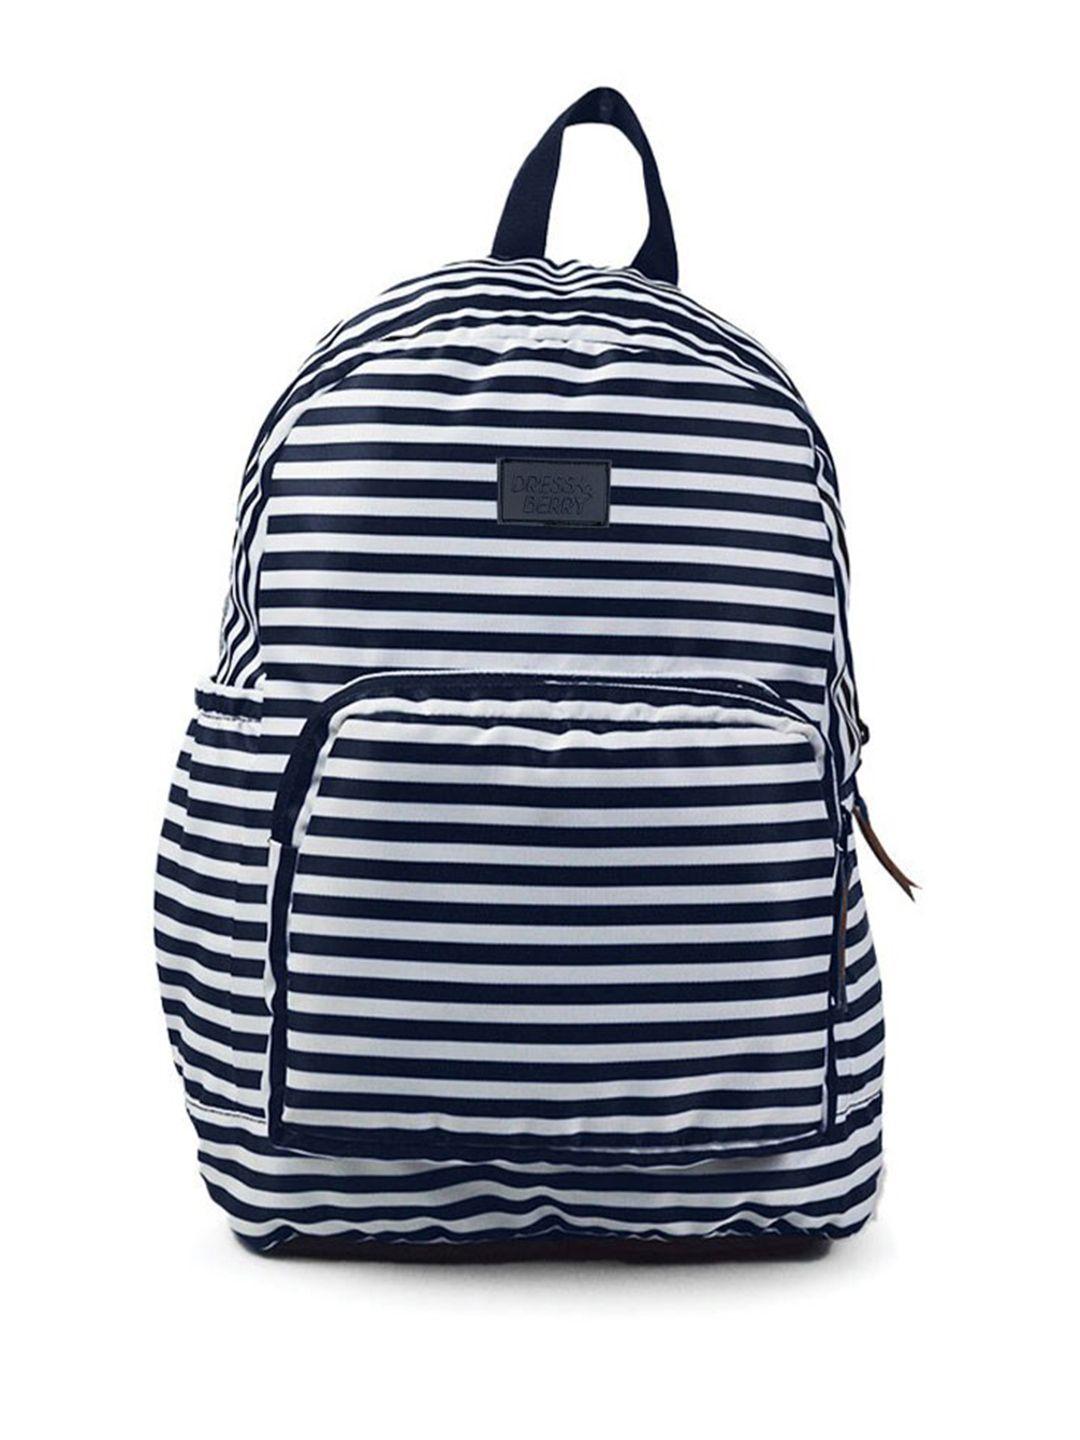 dressberry-unisex-navy-blue-striped-backpack